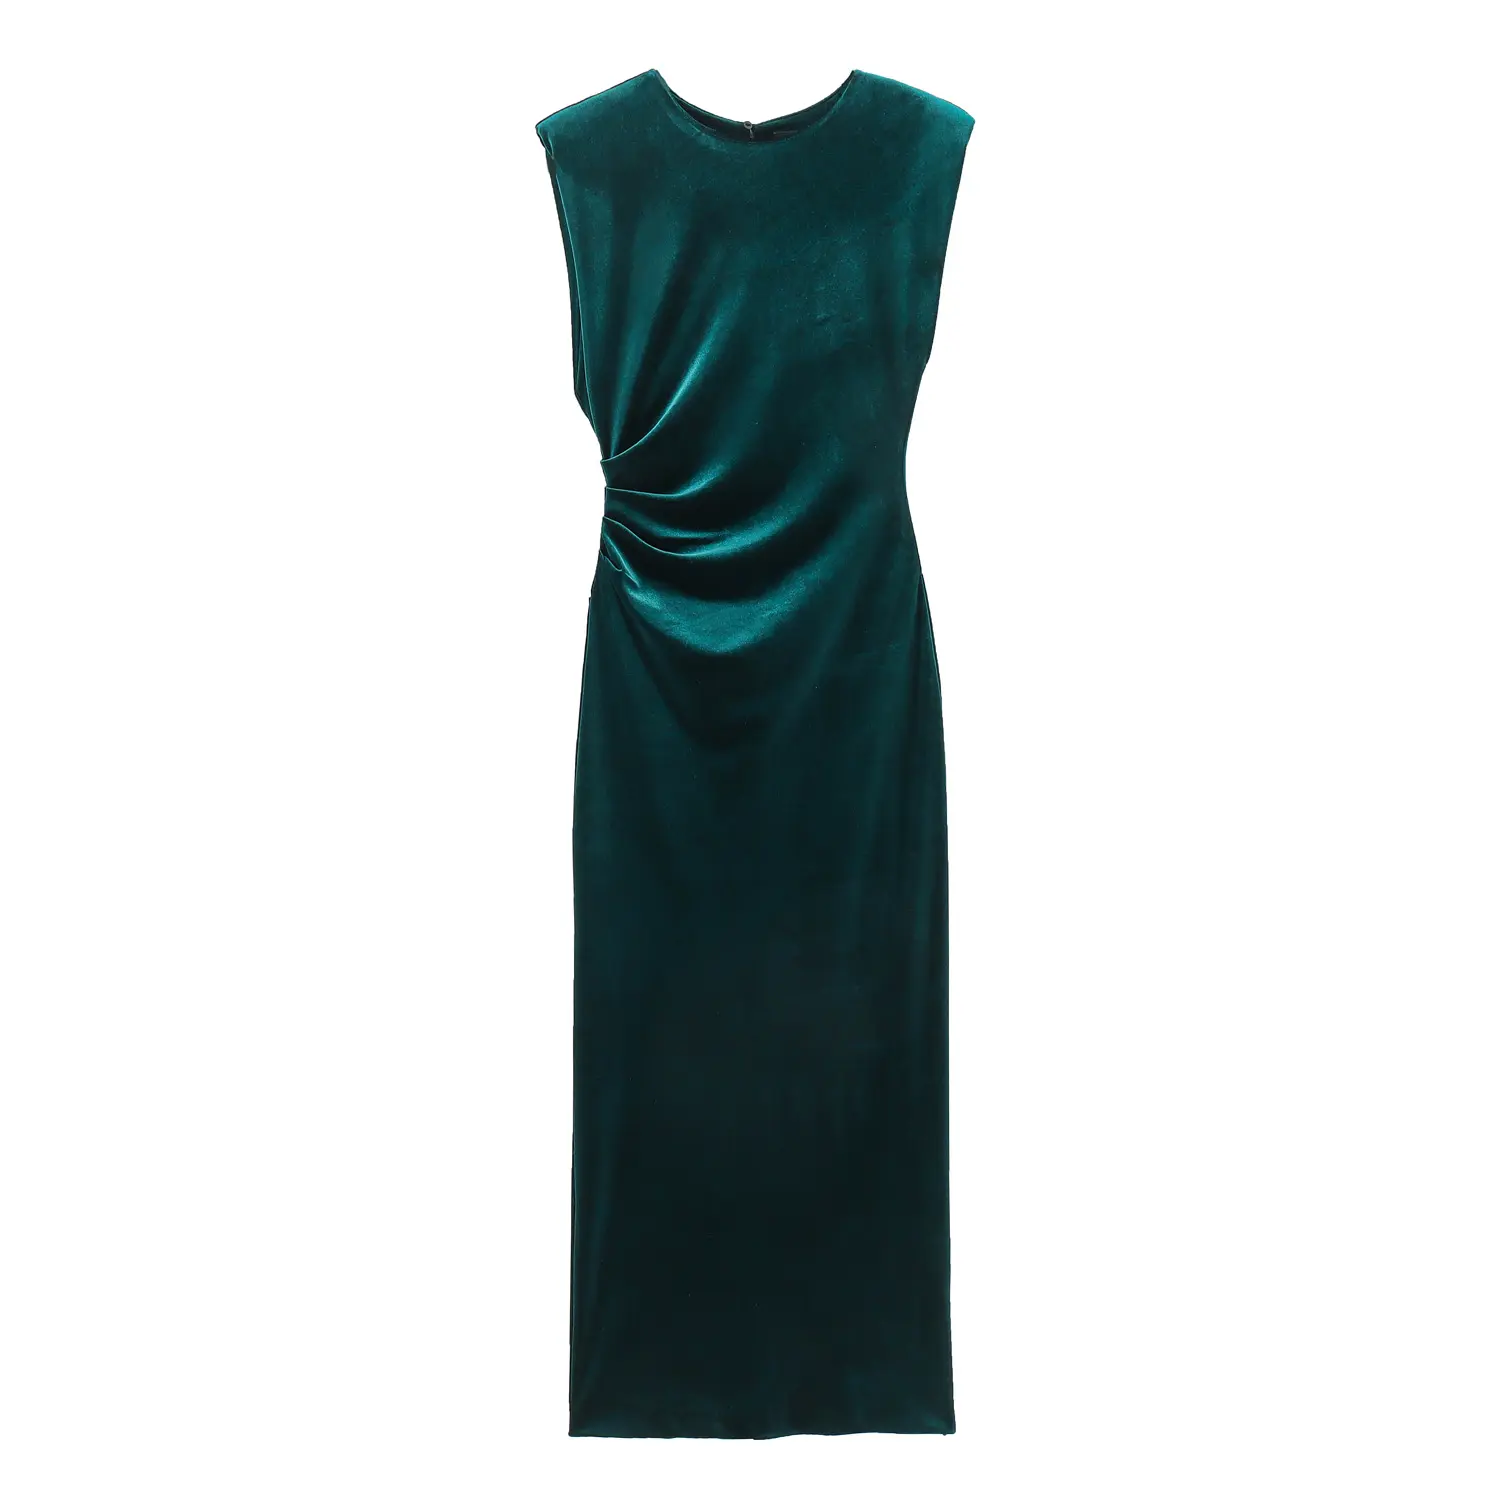 क्रू नेक हरे रंग की स्लीवलेस साइड प्लीटेड कैज़ुअल फैशन महिलाओं की मैक्सी वेलवेट ड्रेस